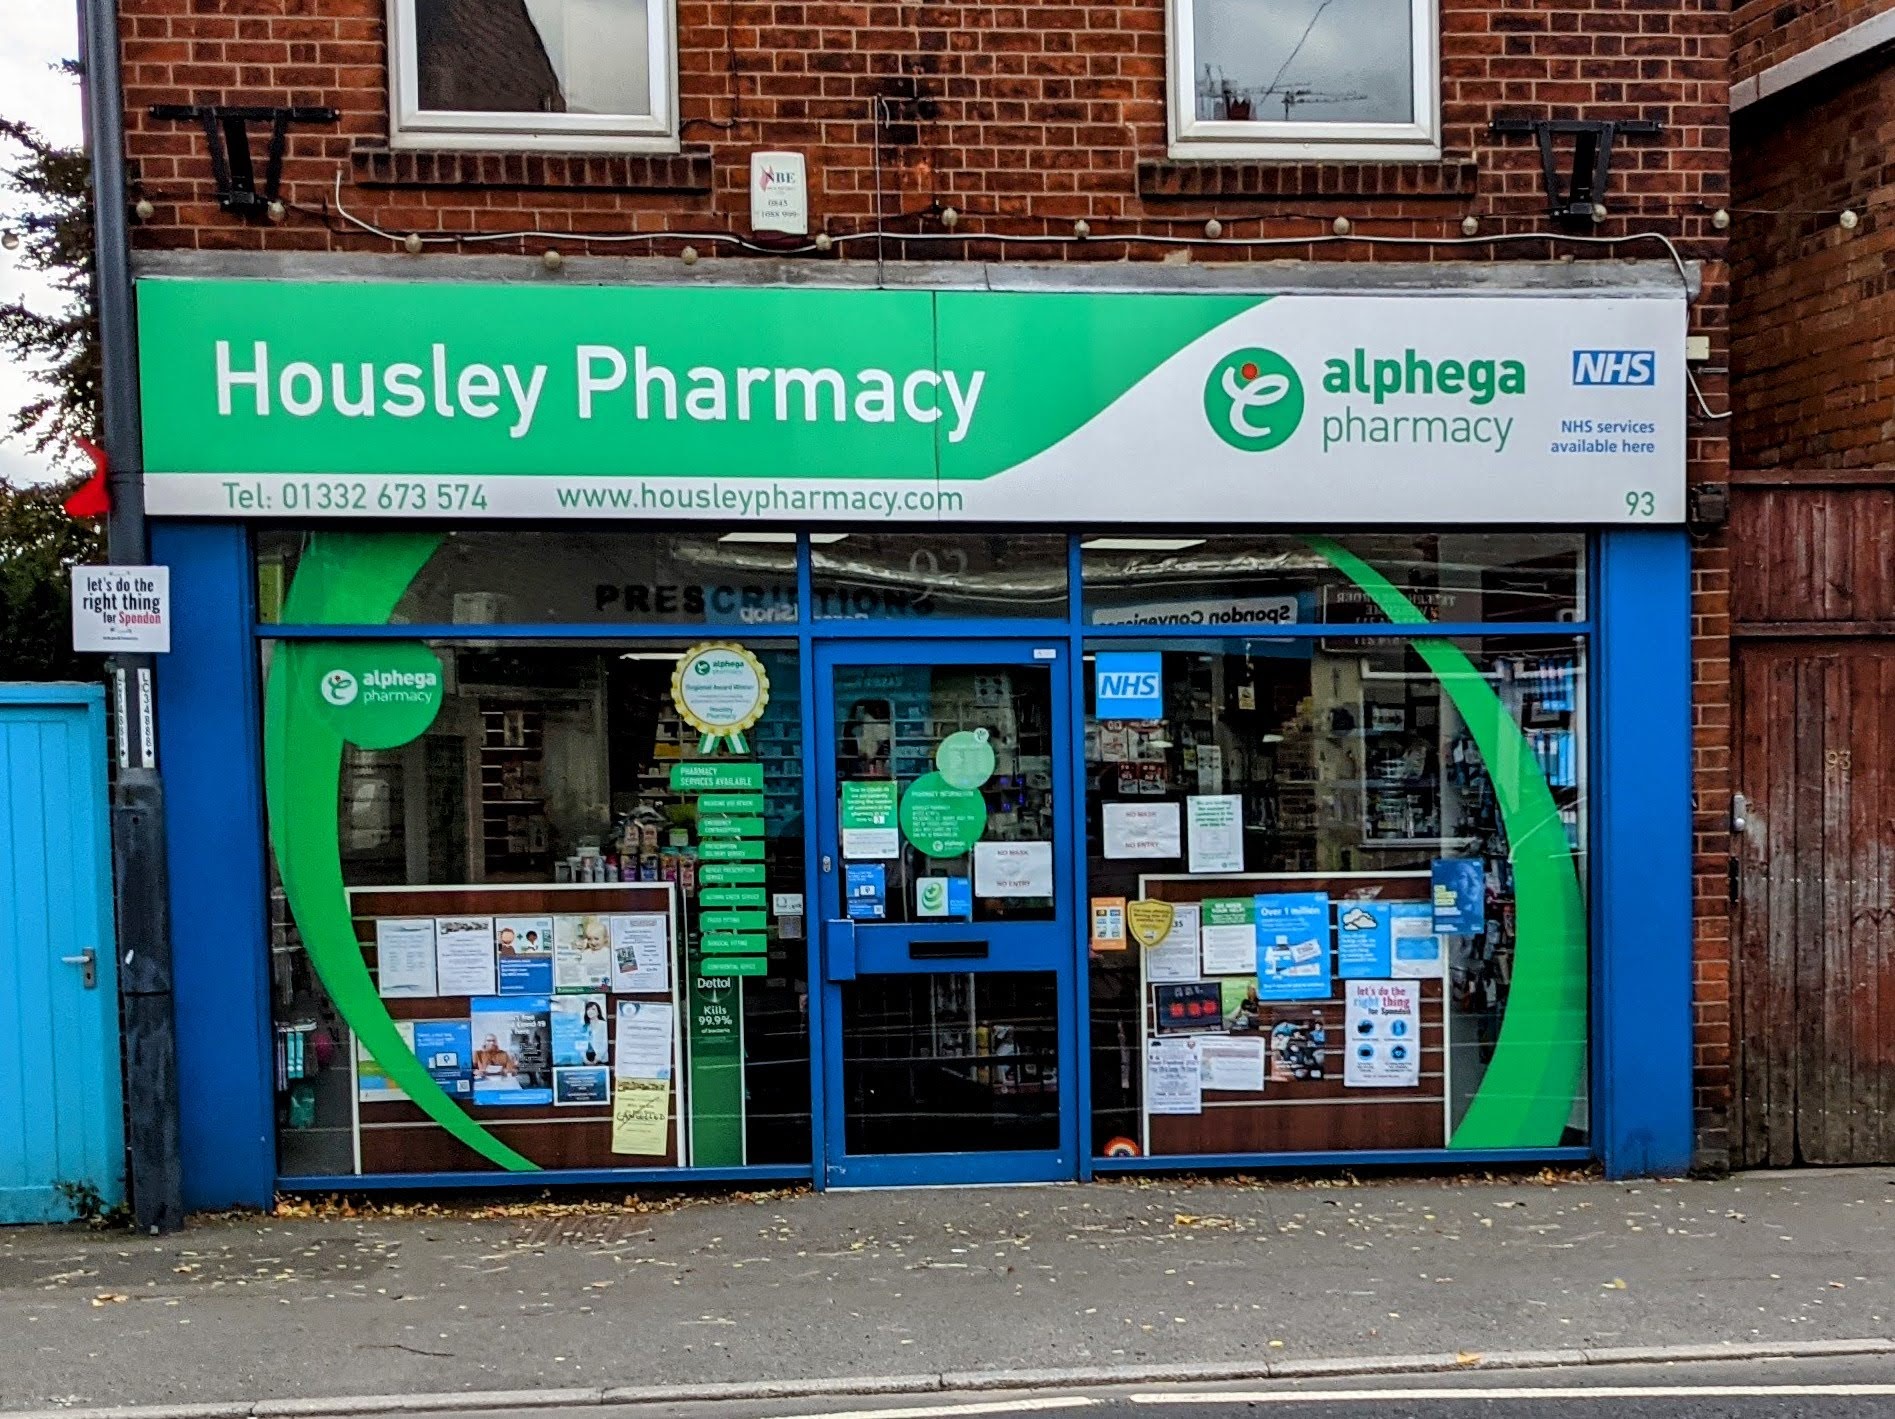 Housley Pharmacy - Alphega Pharmacy